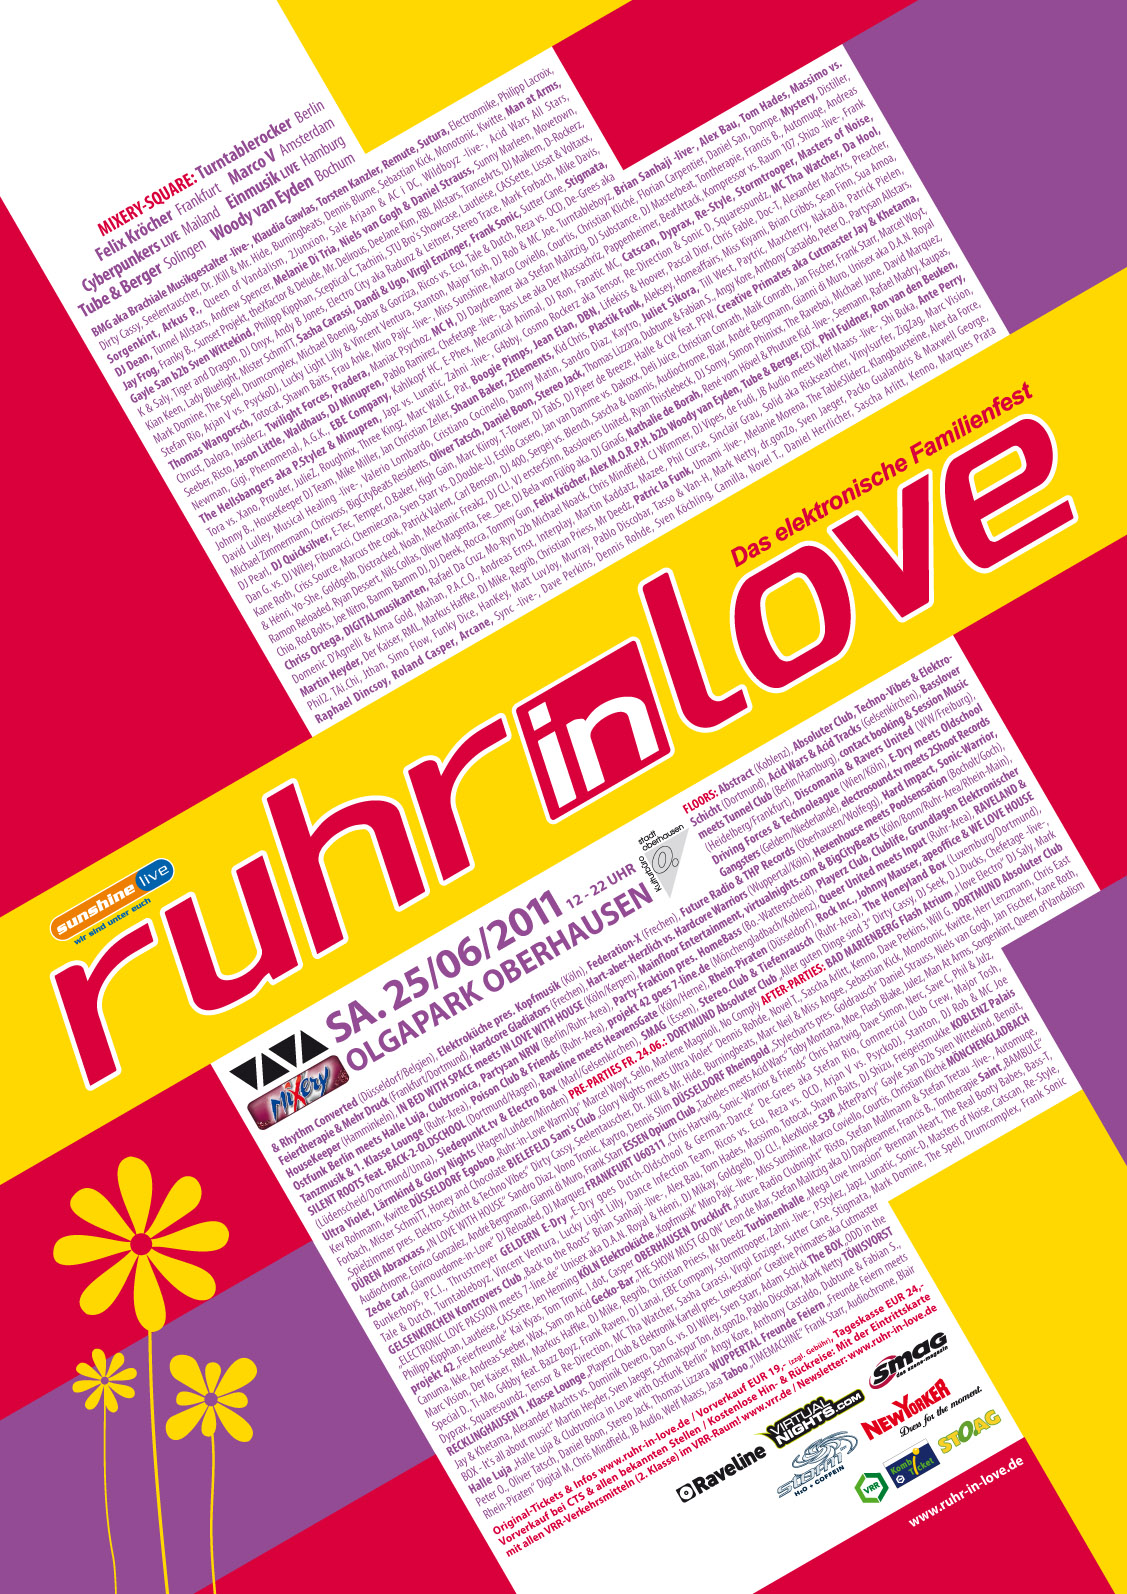  - 18-04-11--ruhr-in-love